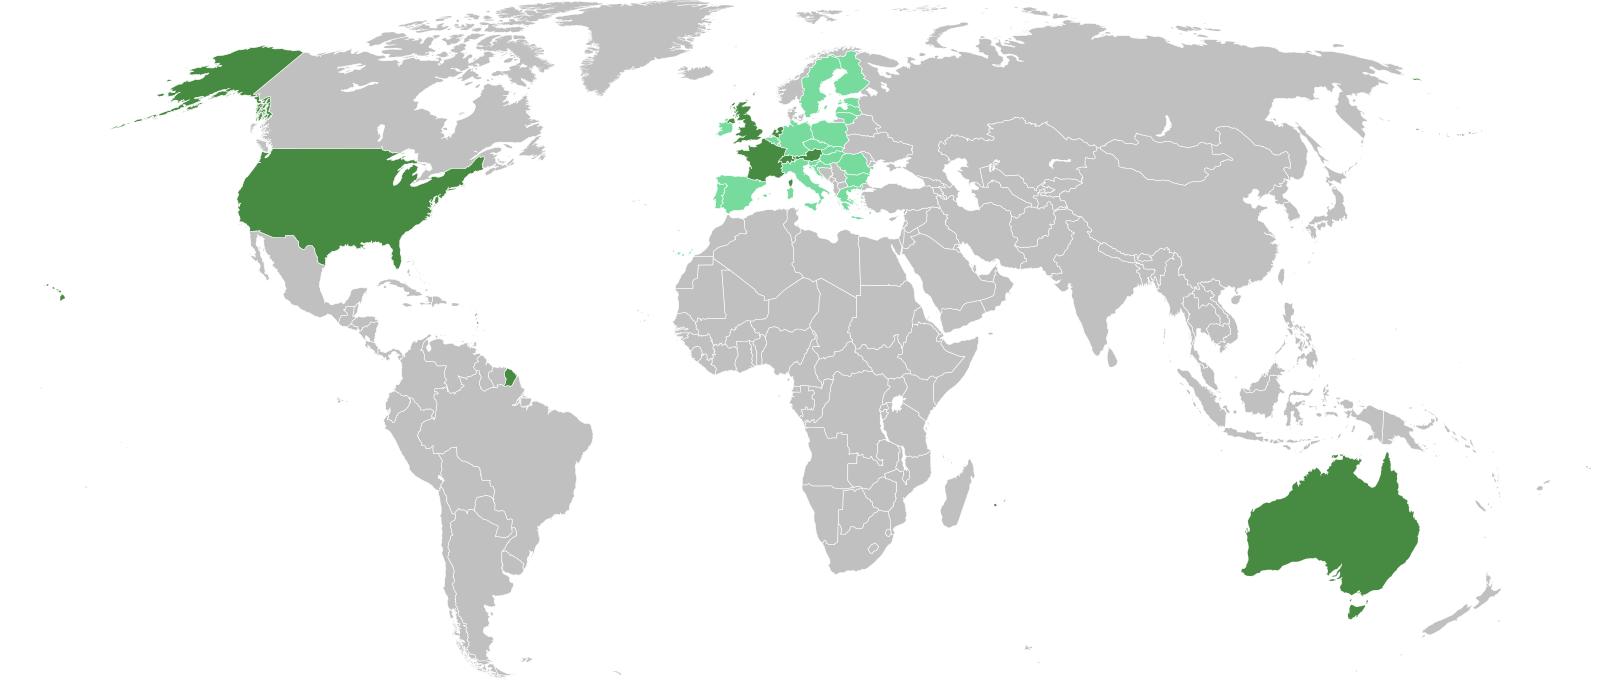 Cloropleth World Map CSR